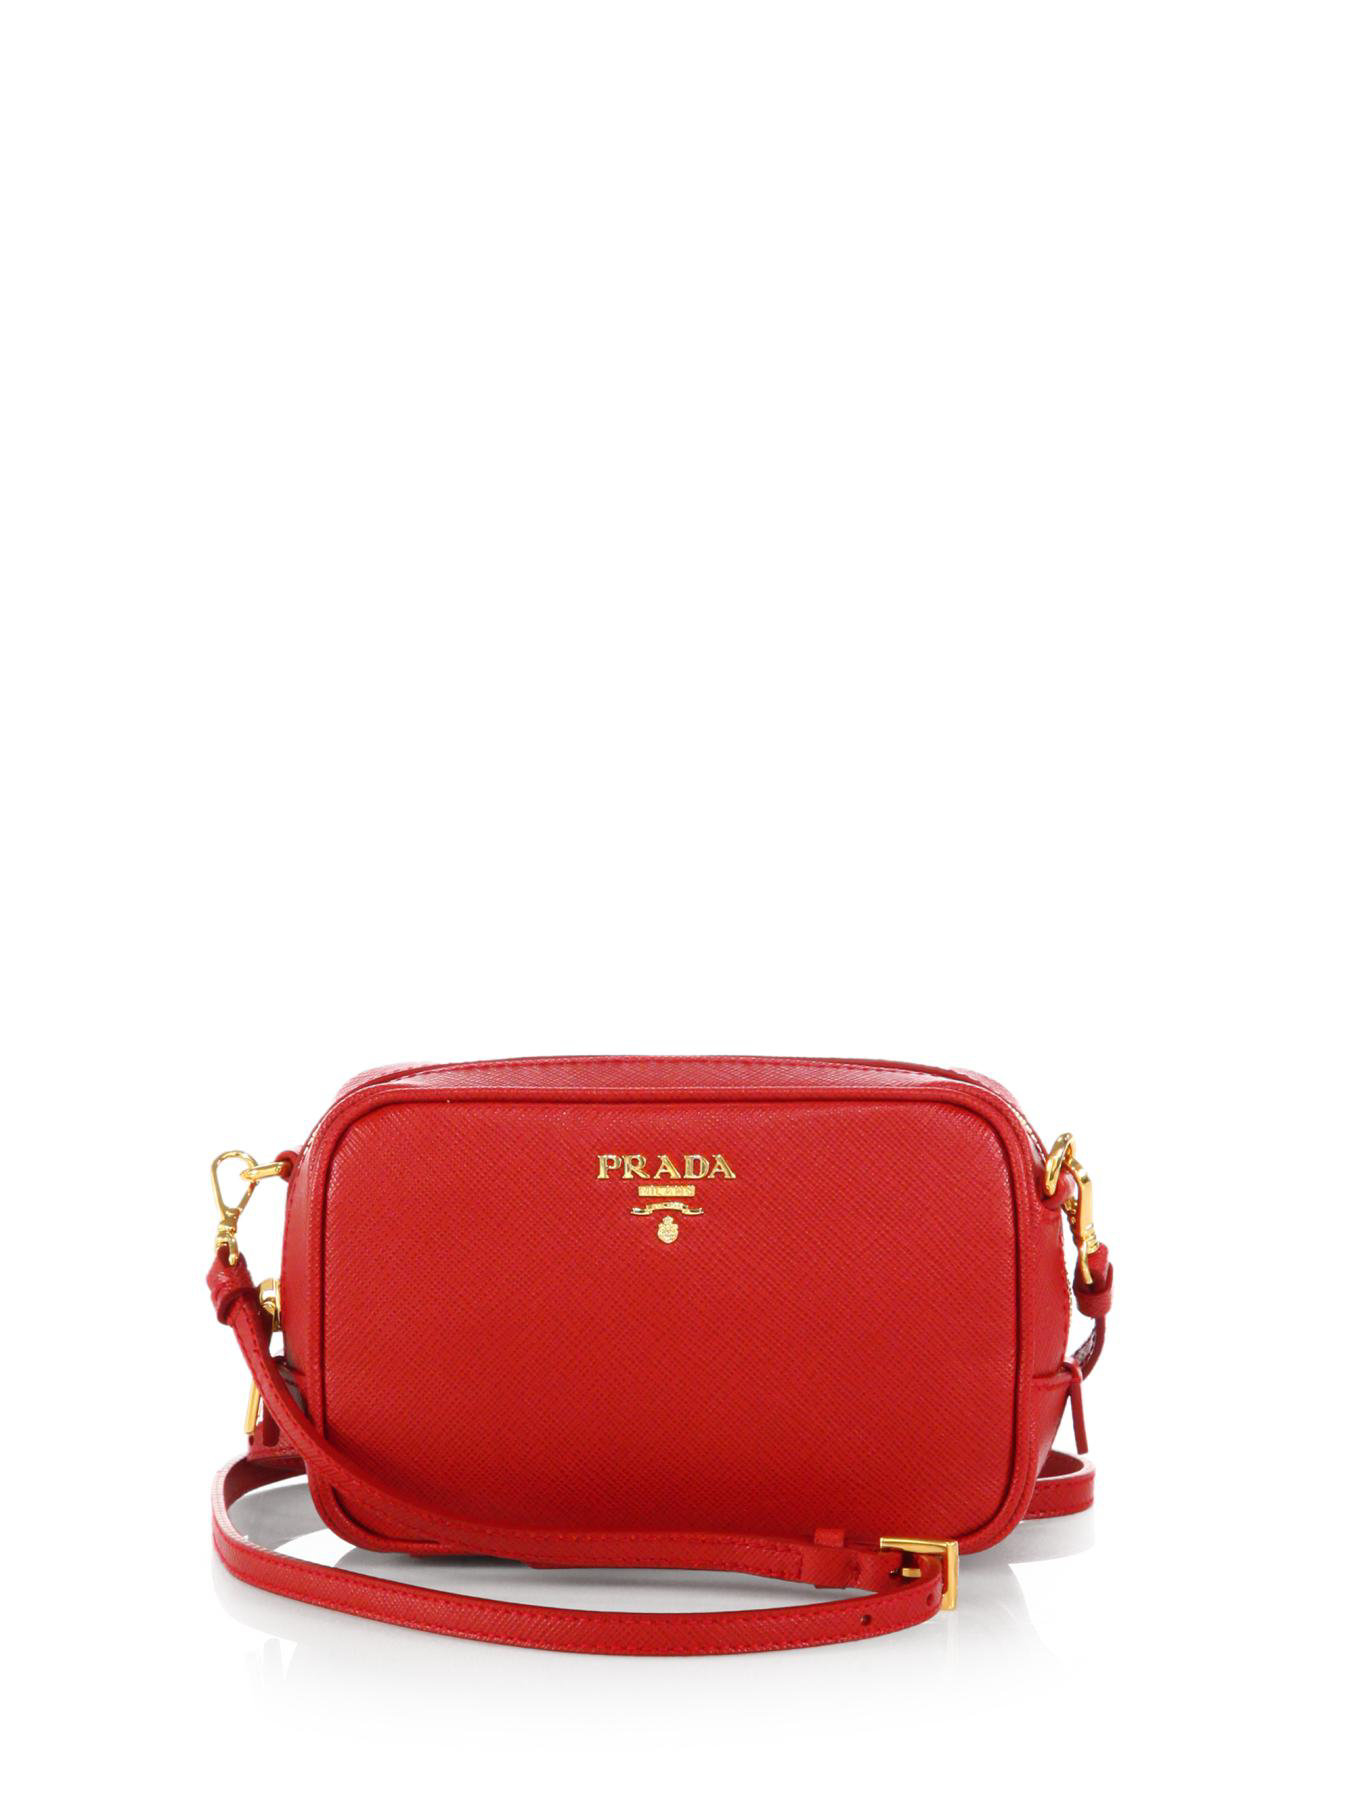 Prada Saffiano Leather Camera Bag in Red (FUOCO-RED) | Lyst